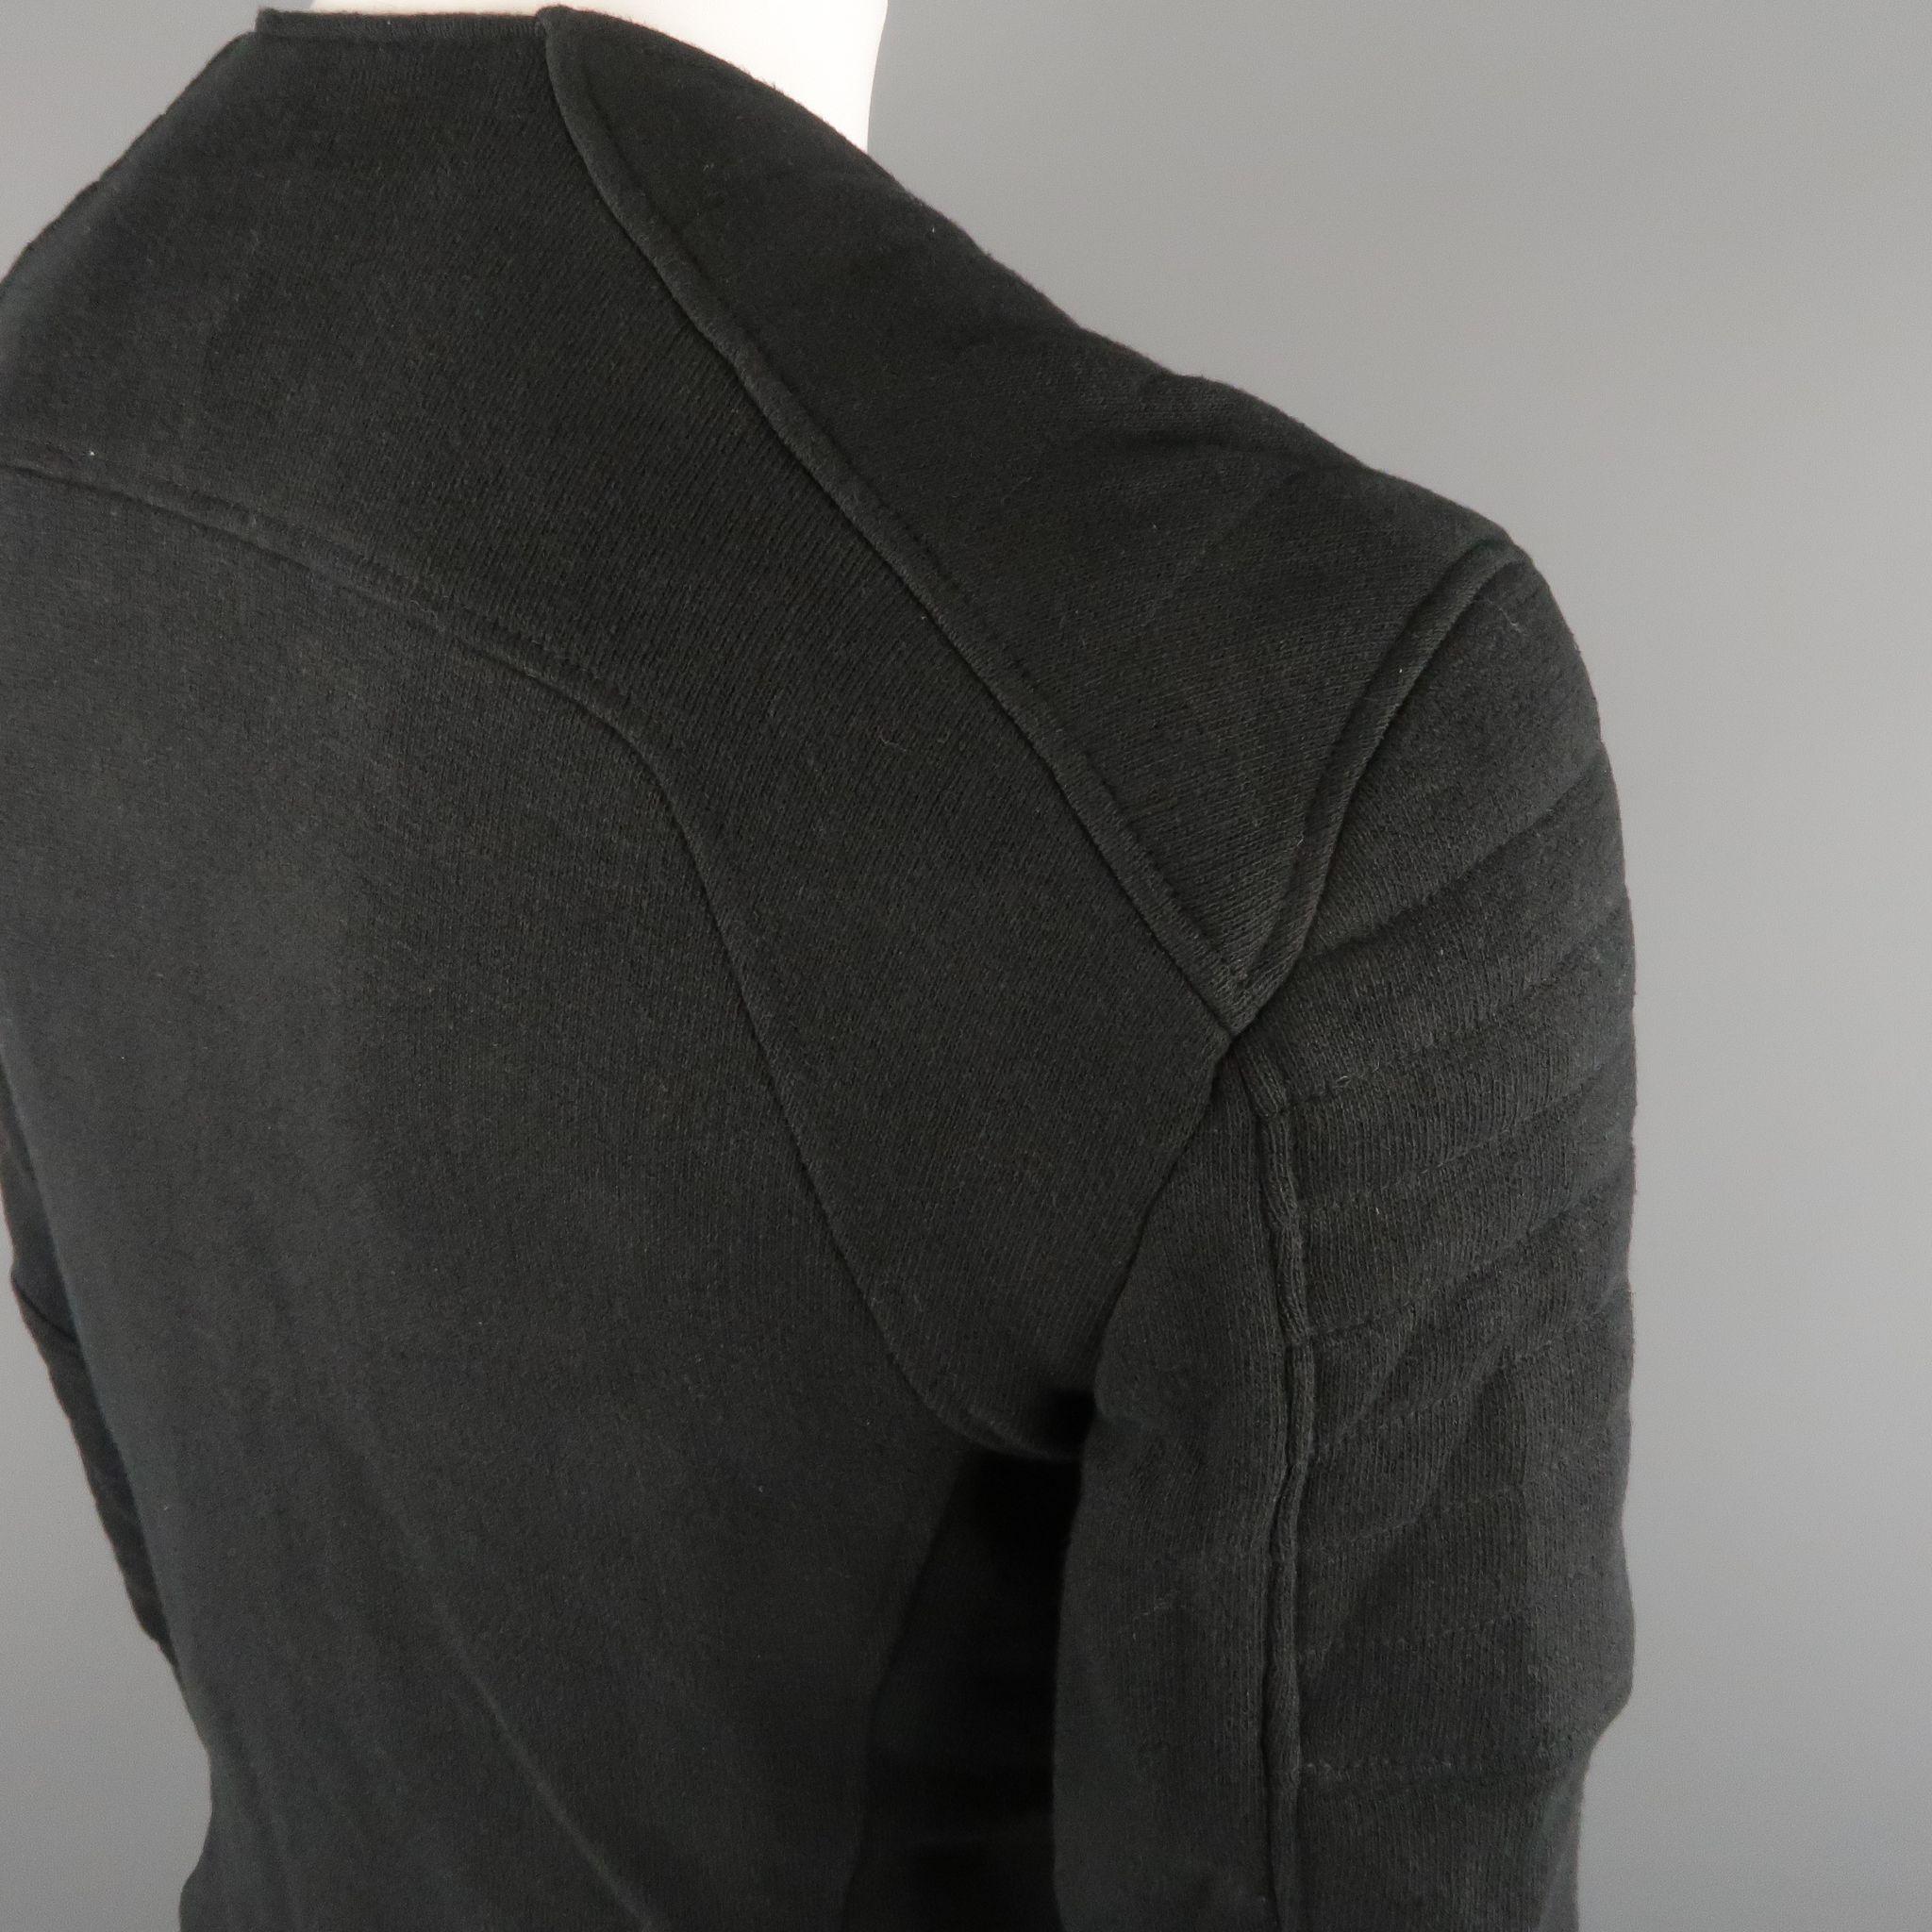 BALMAIN Motorcycle Jacket - Size Large - Men's Black Cotton / Linen  3